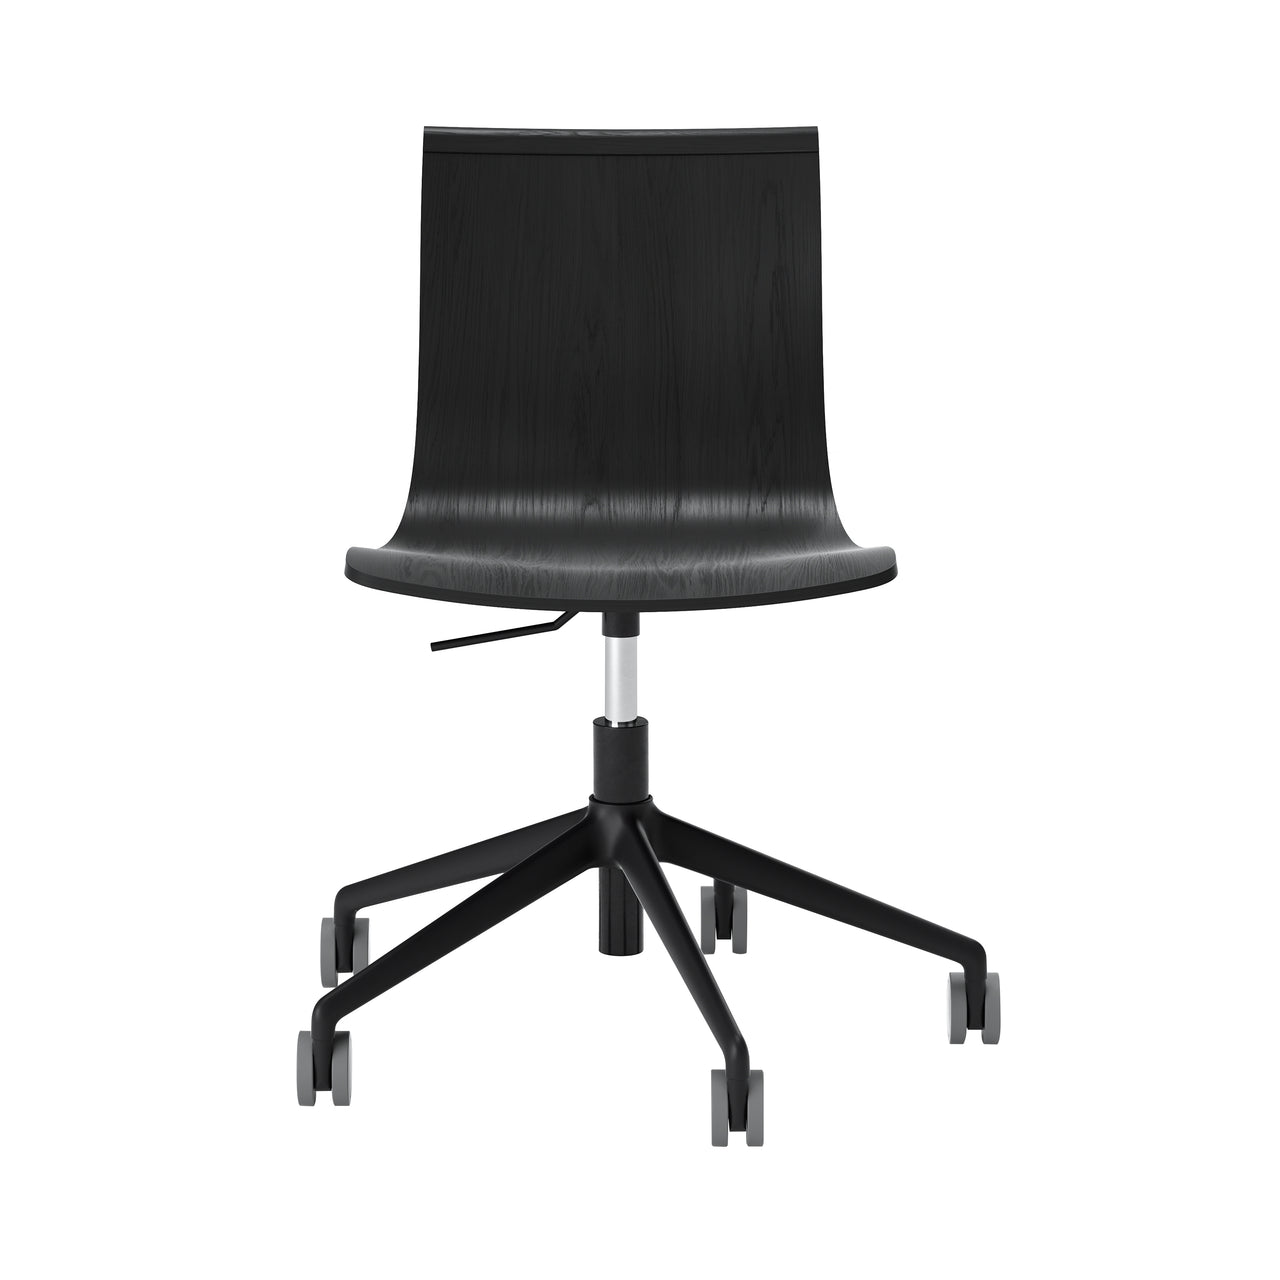 Serif Chair: 5 Star Base + Castors + Black + Black Stained Oak